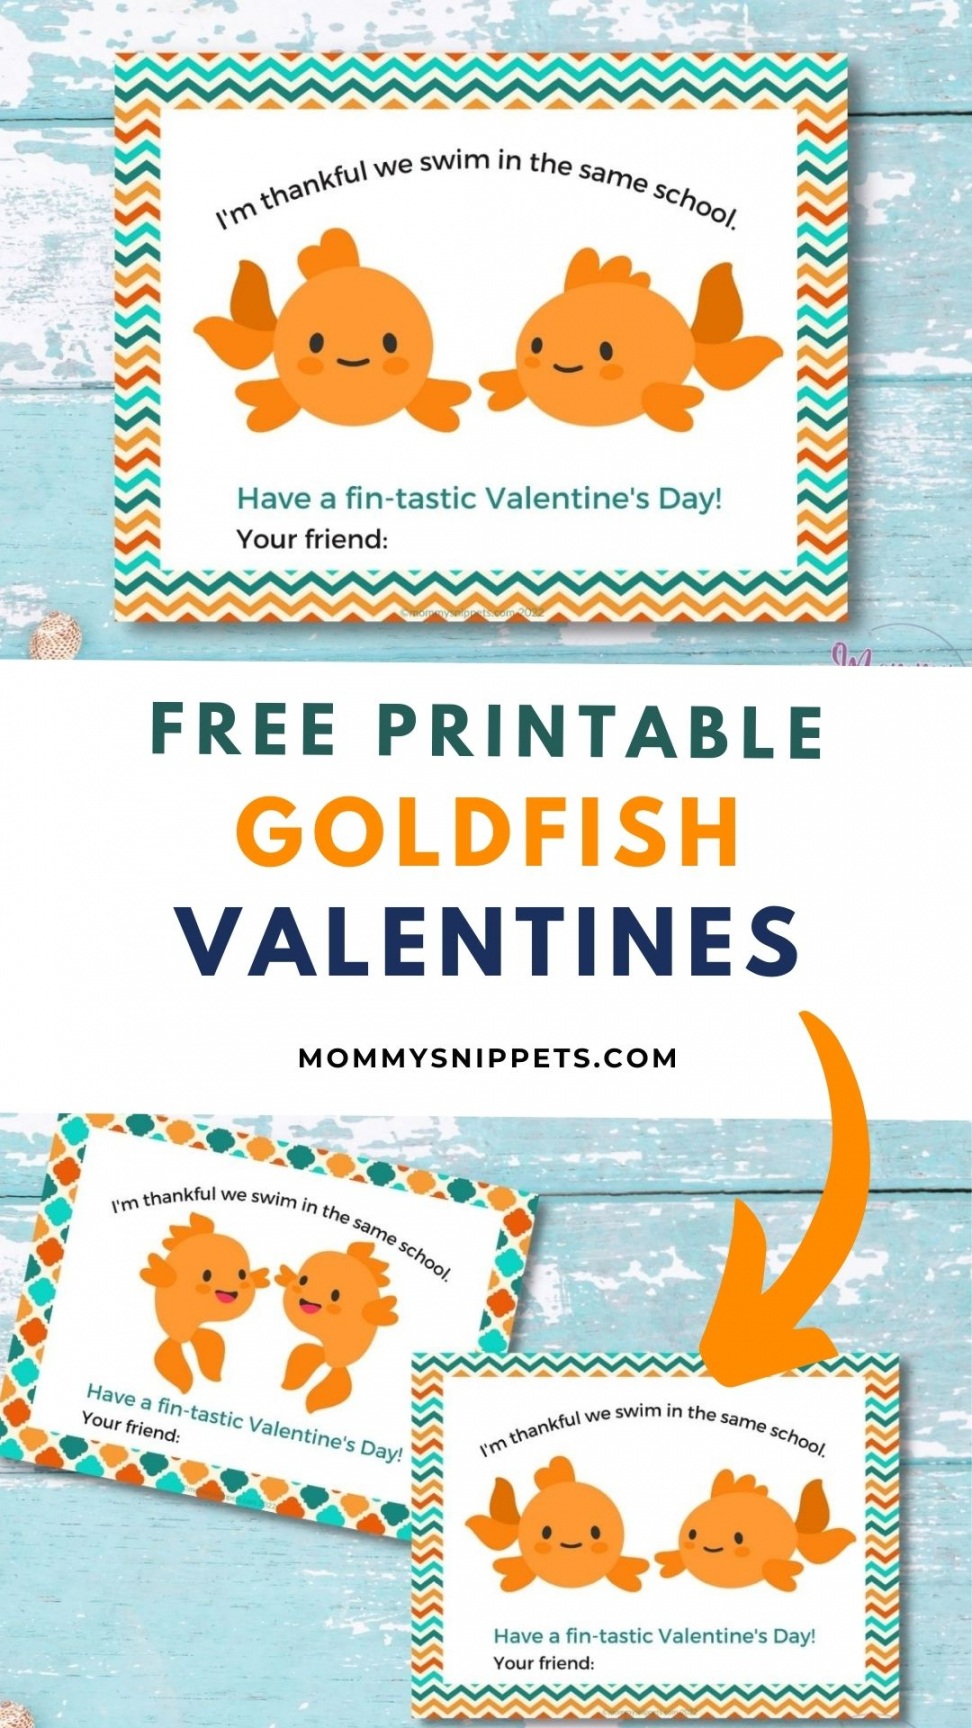 Free Printable Goldfish Valentines for Kids - Mommy Snippets - FREE Printables - Goldfish Valentine Printable Free